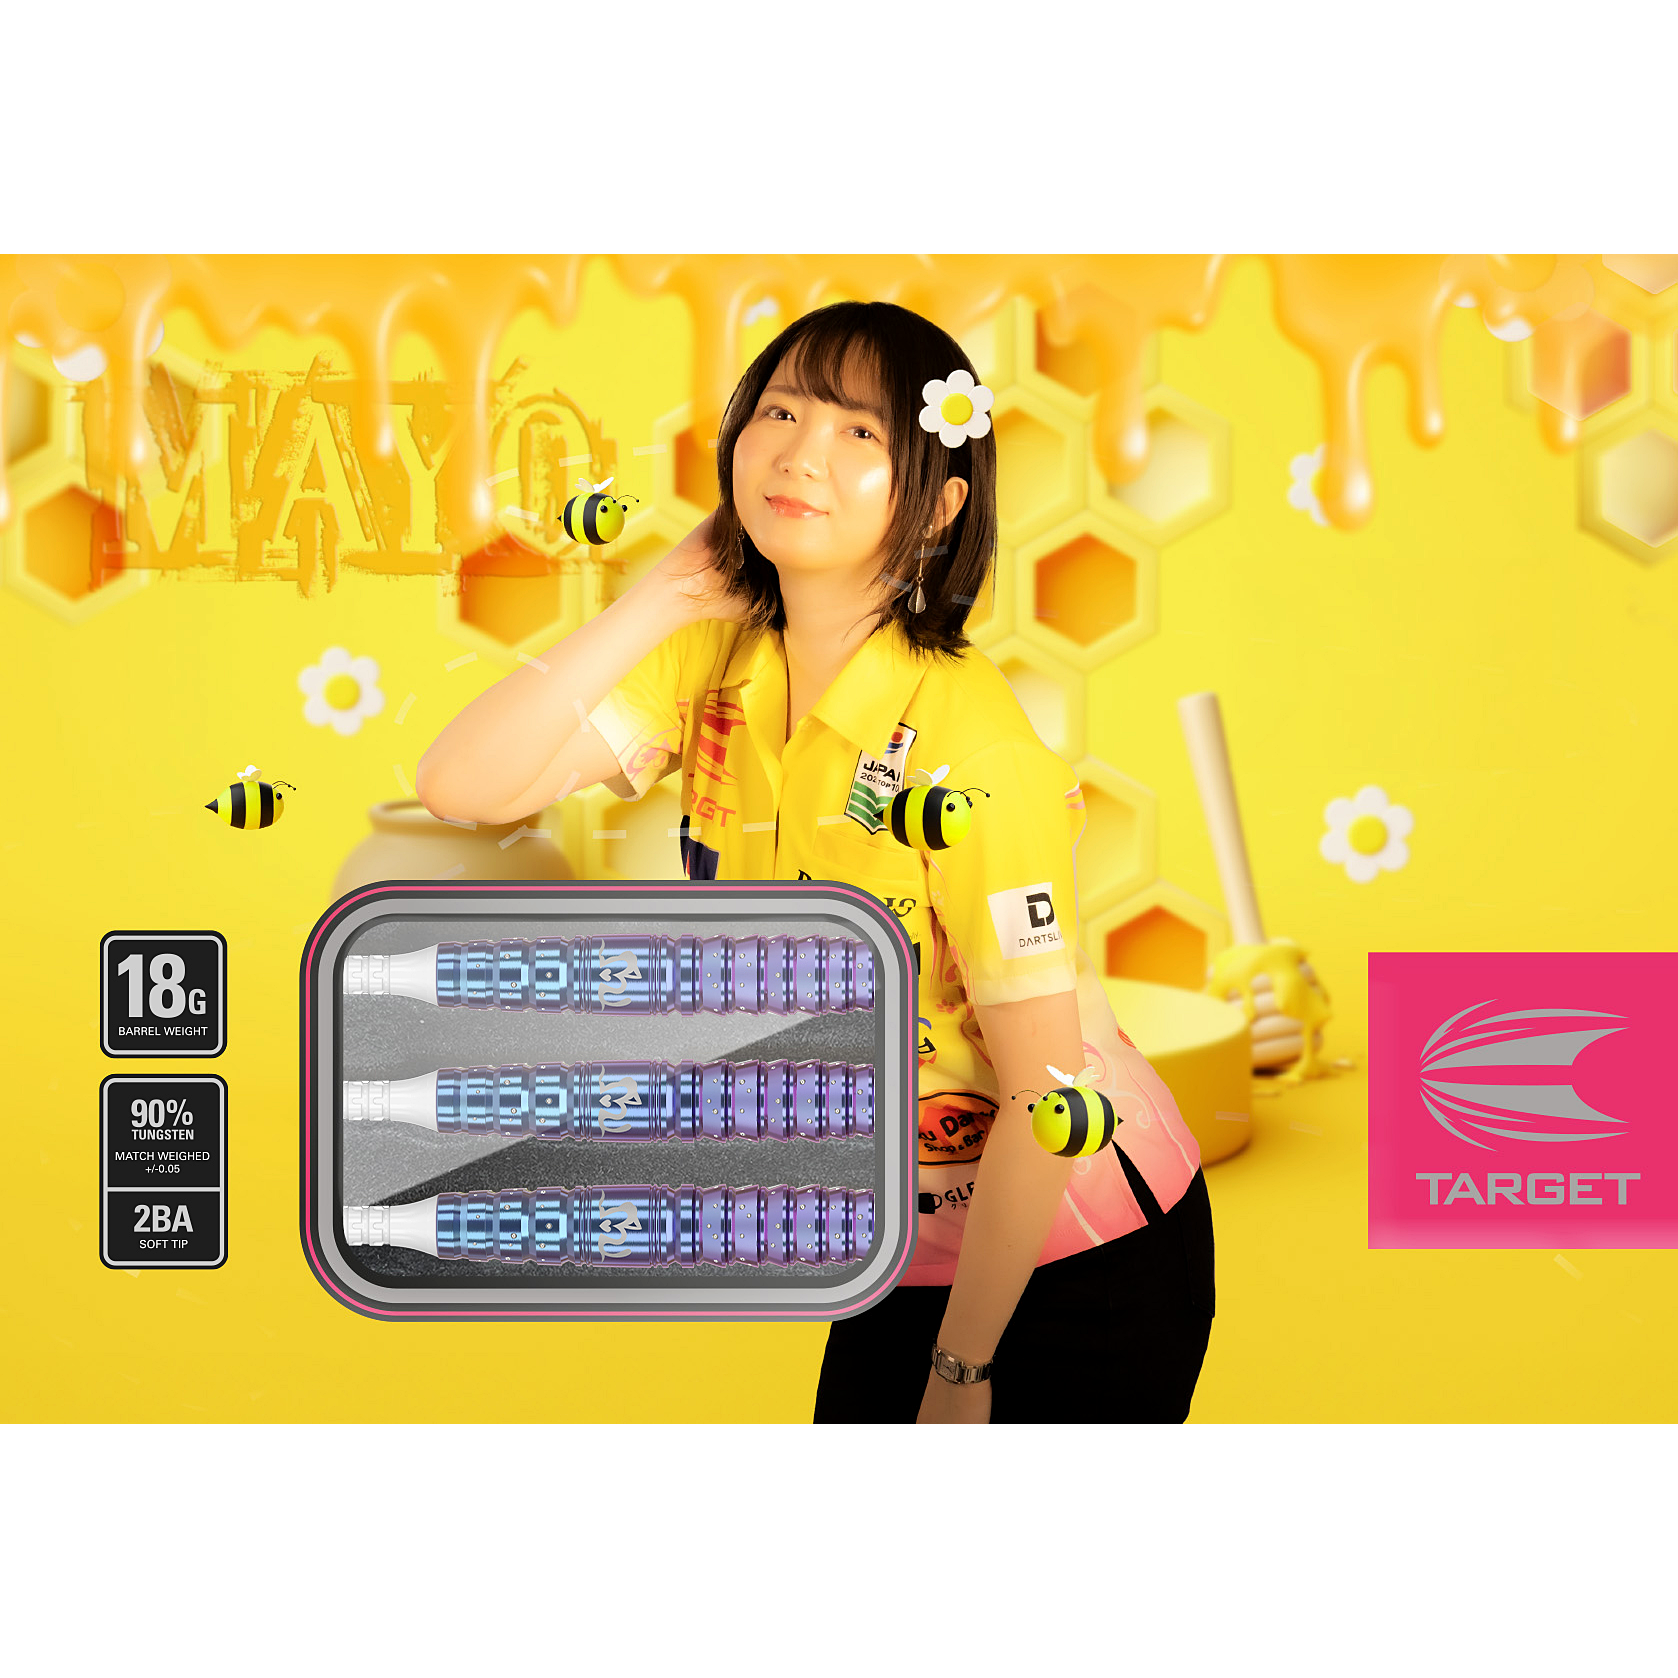 Target - Prime Series Mayuko Morita GEN 5 MAX Mayo - Softdart